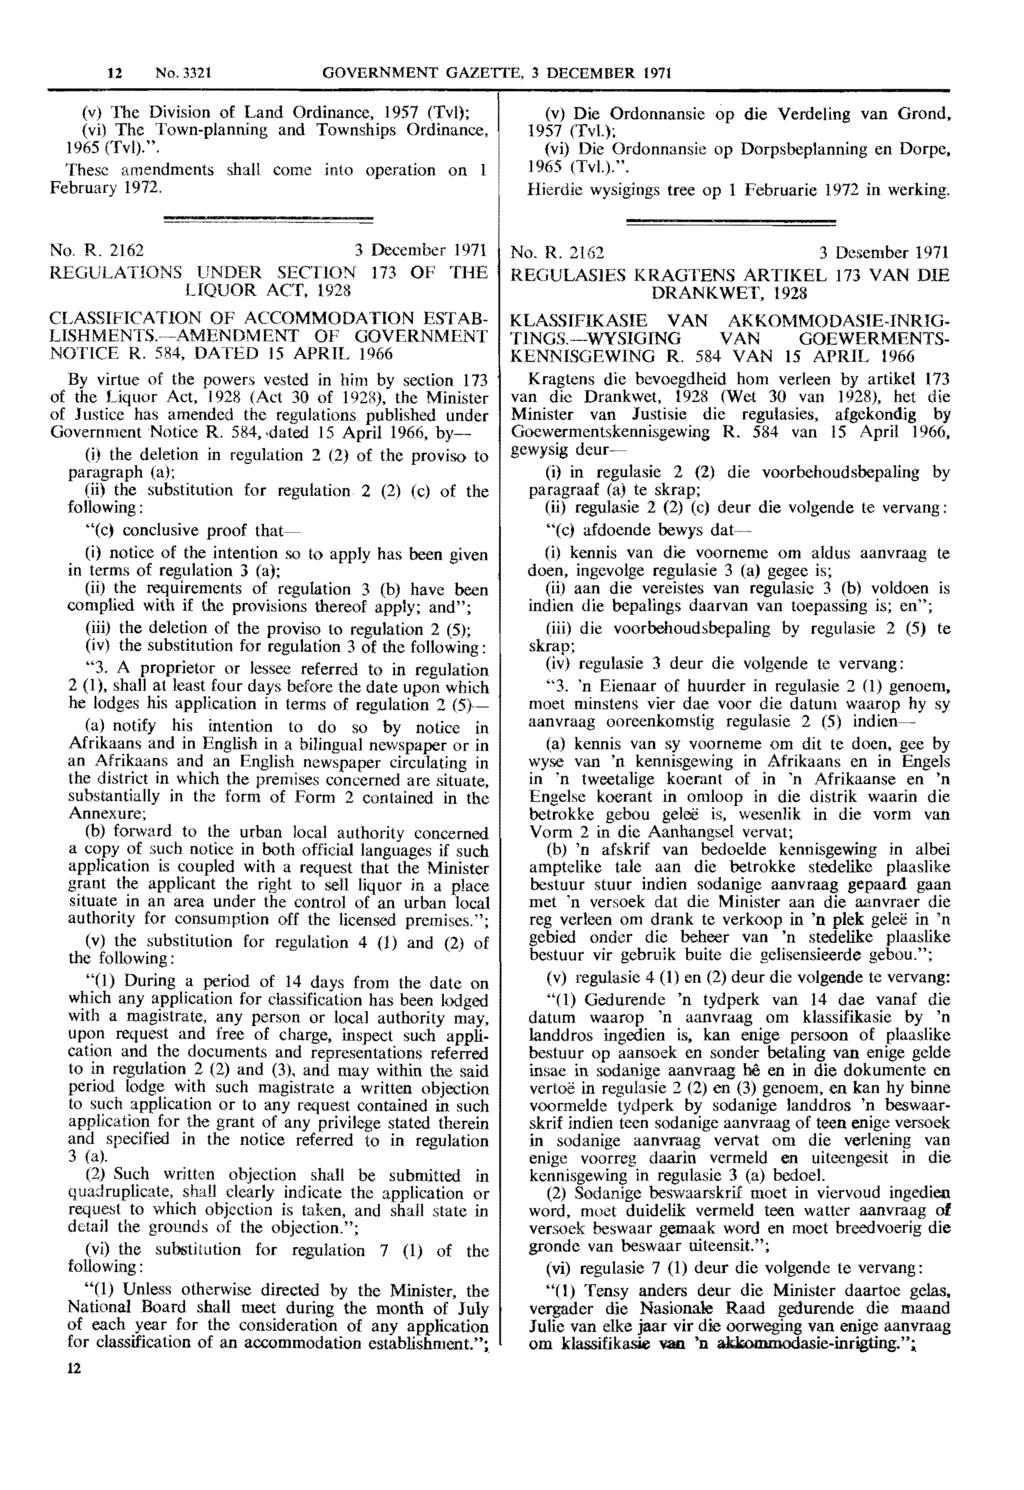 12 No. 3321 GOVERNMENT GAZETTE, 3 DECEMBER 1971 (v) The Division of Land Ordinance, 1957 (Tvl); (vi) The Town-planning and Townships Ordinance, 1965 (Tvl).".